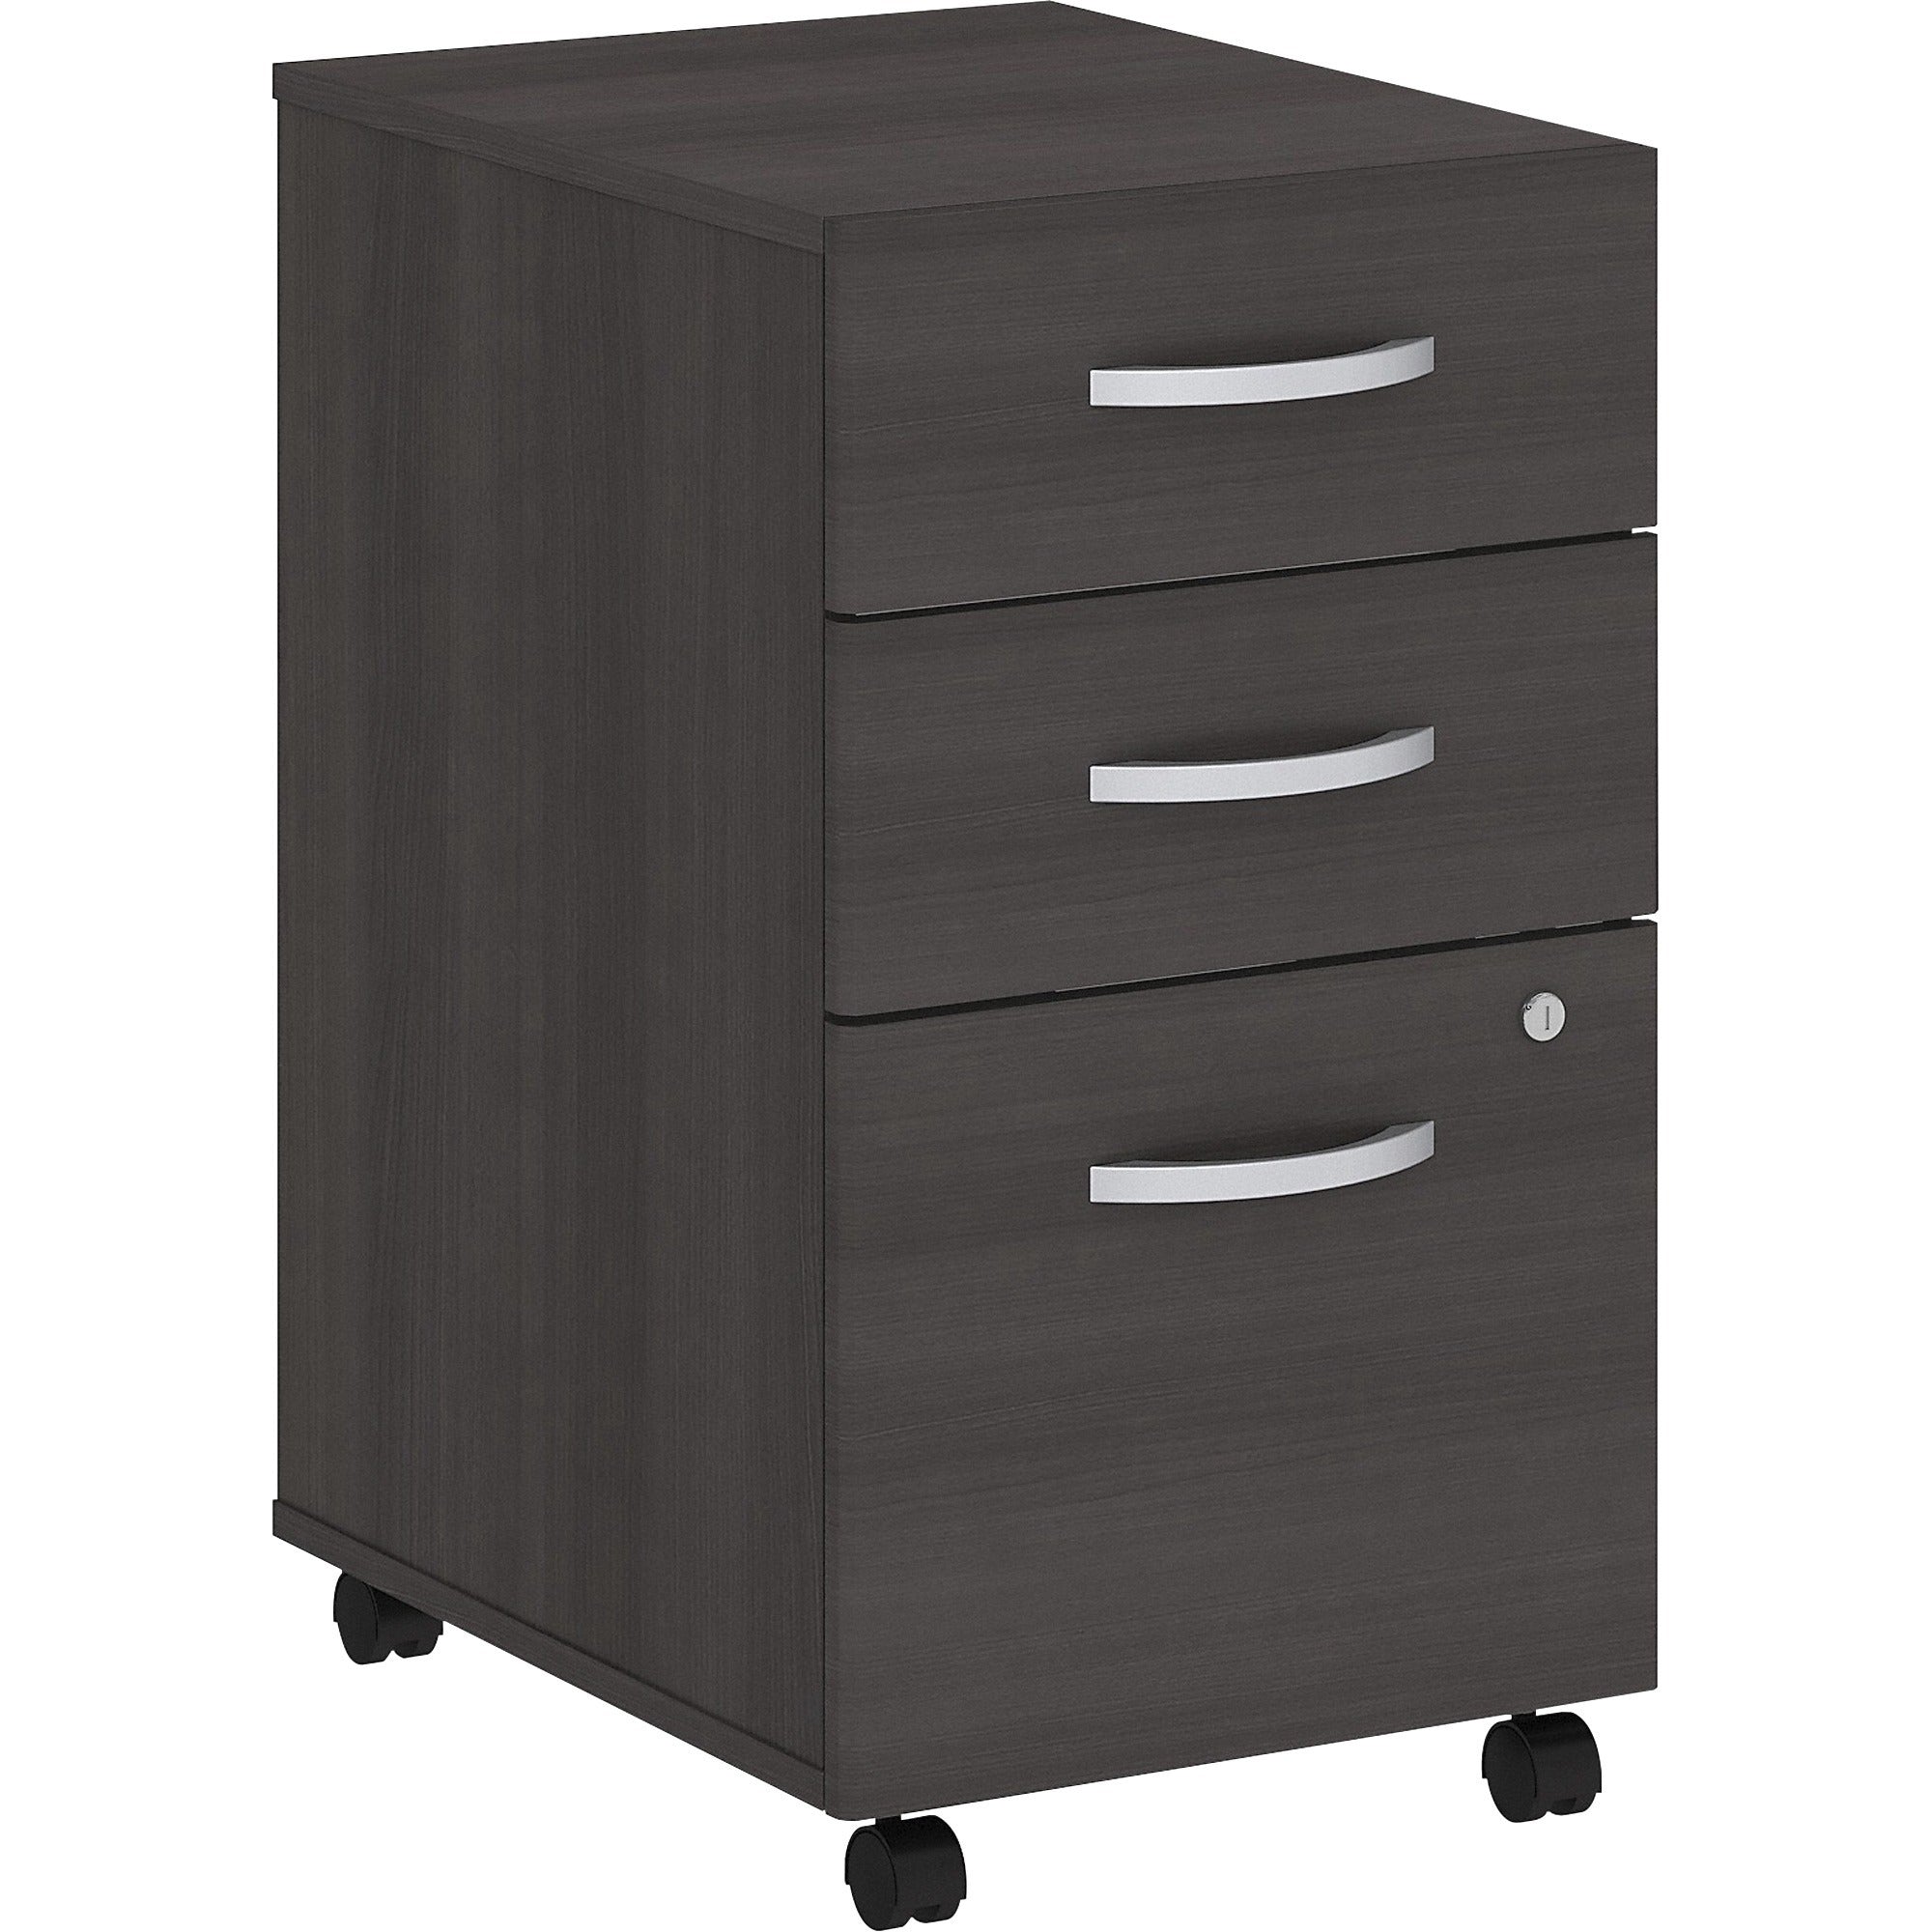 Bush Business Furniture Studio C 3 Drawer Mobile File Cabinet - 15.7" x 20.2"27.8" - 3 x File, Box Drawer(s) - Finish: Storm Gray, Thermofused Laminate (TFL) - 1